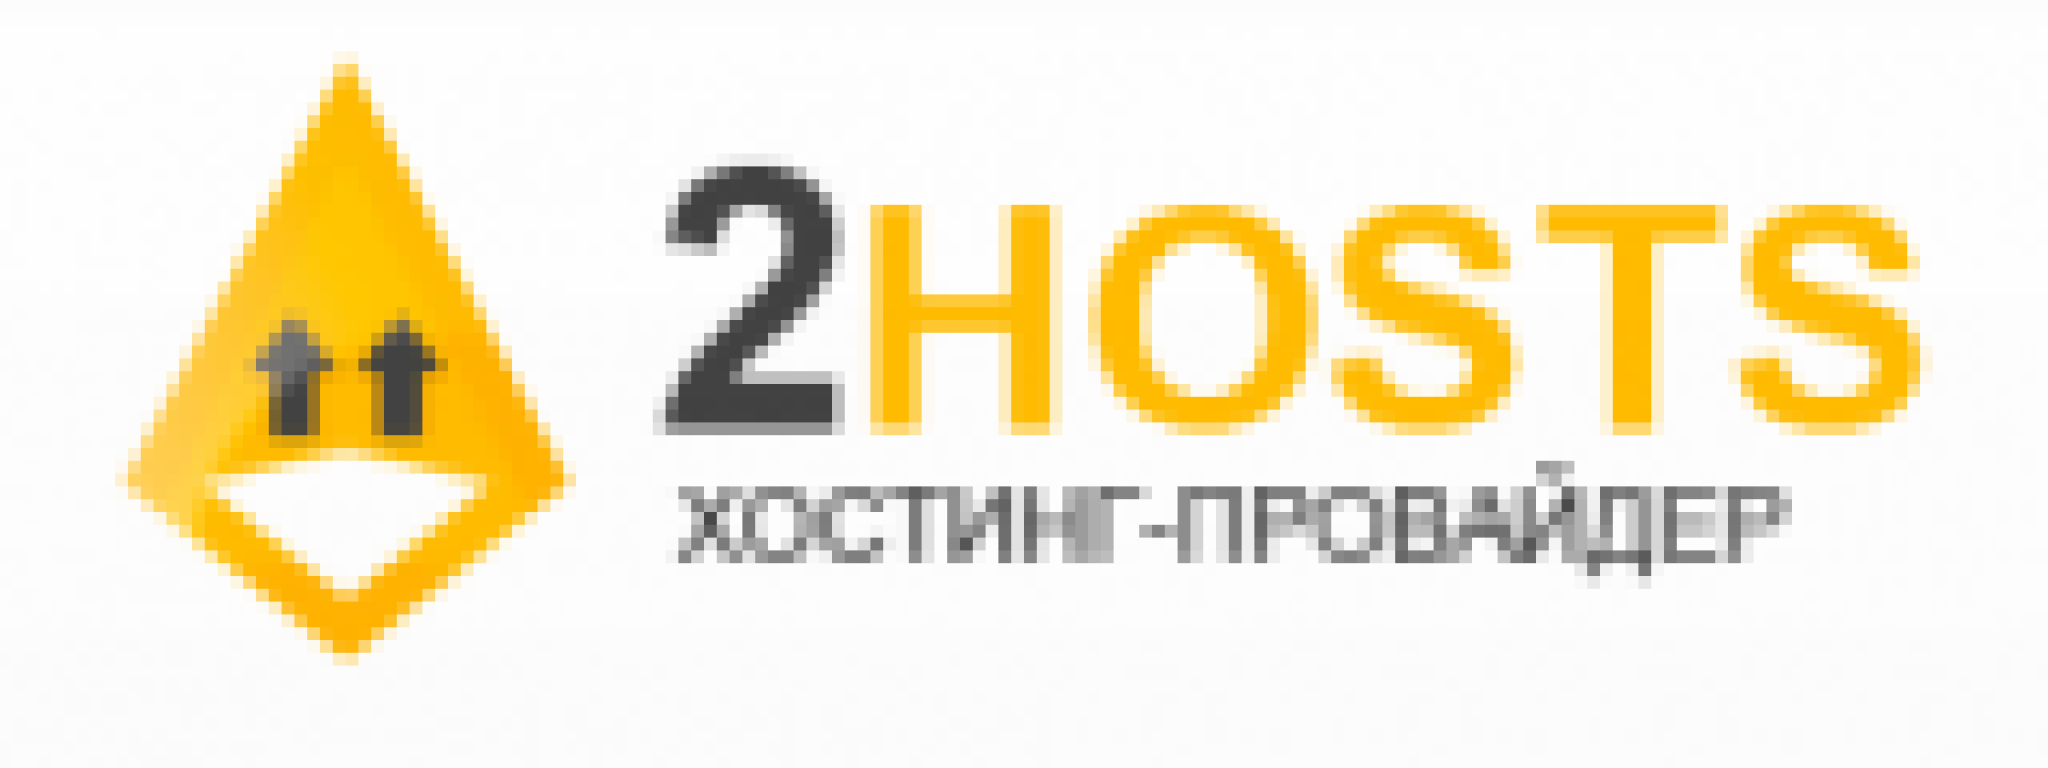 1 host ru. Акция хостинг. Хостер компания. Хостеры фото. ОГК-2 логотип.